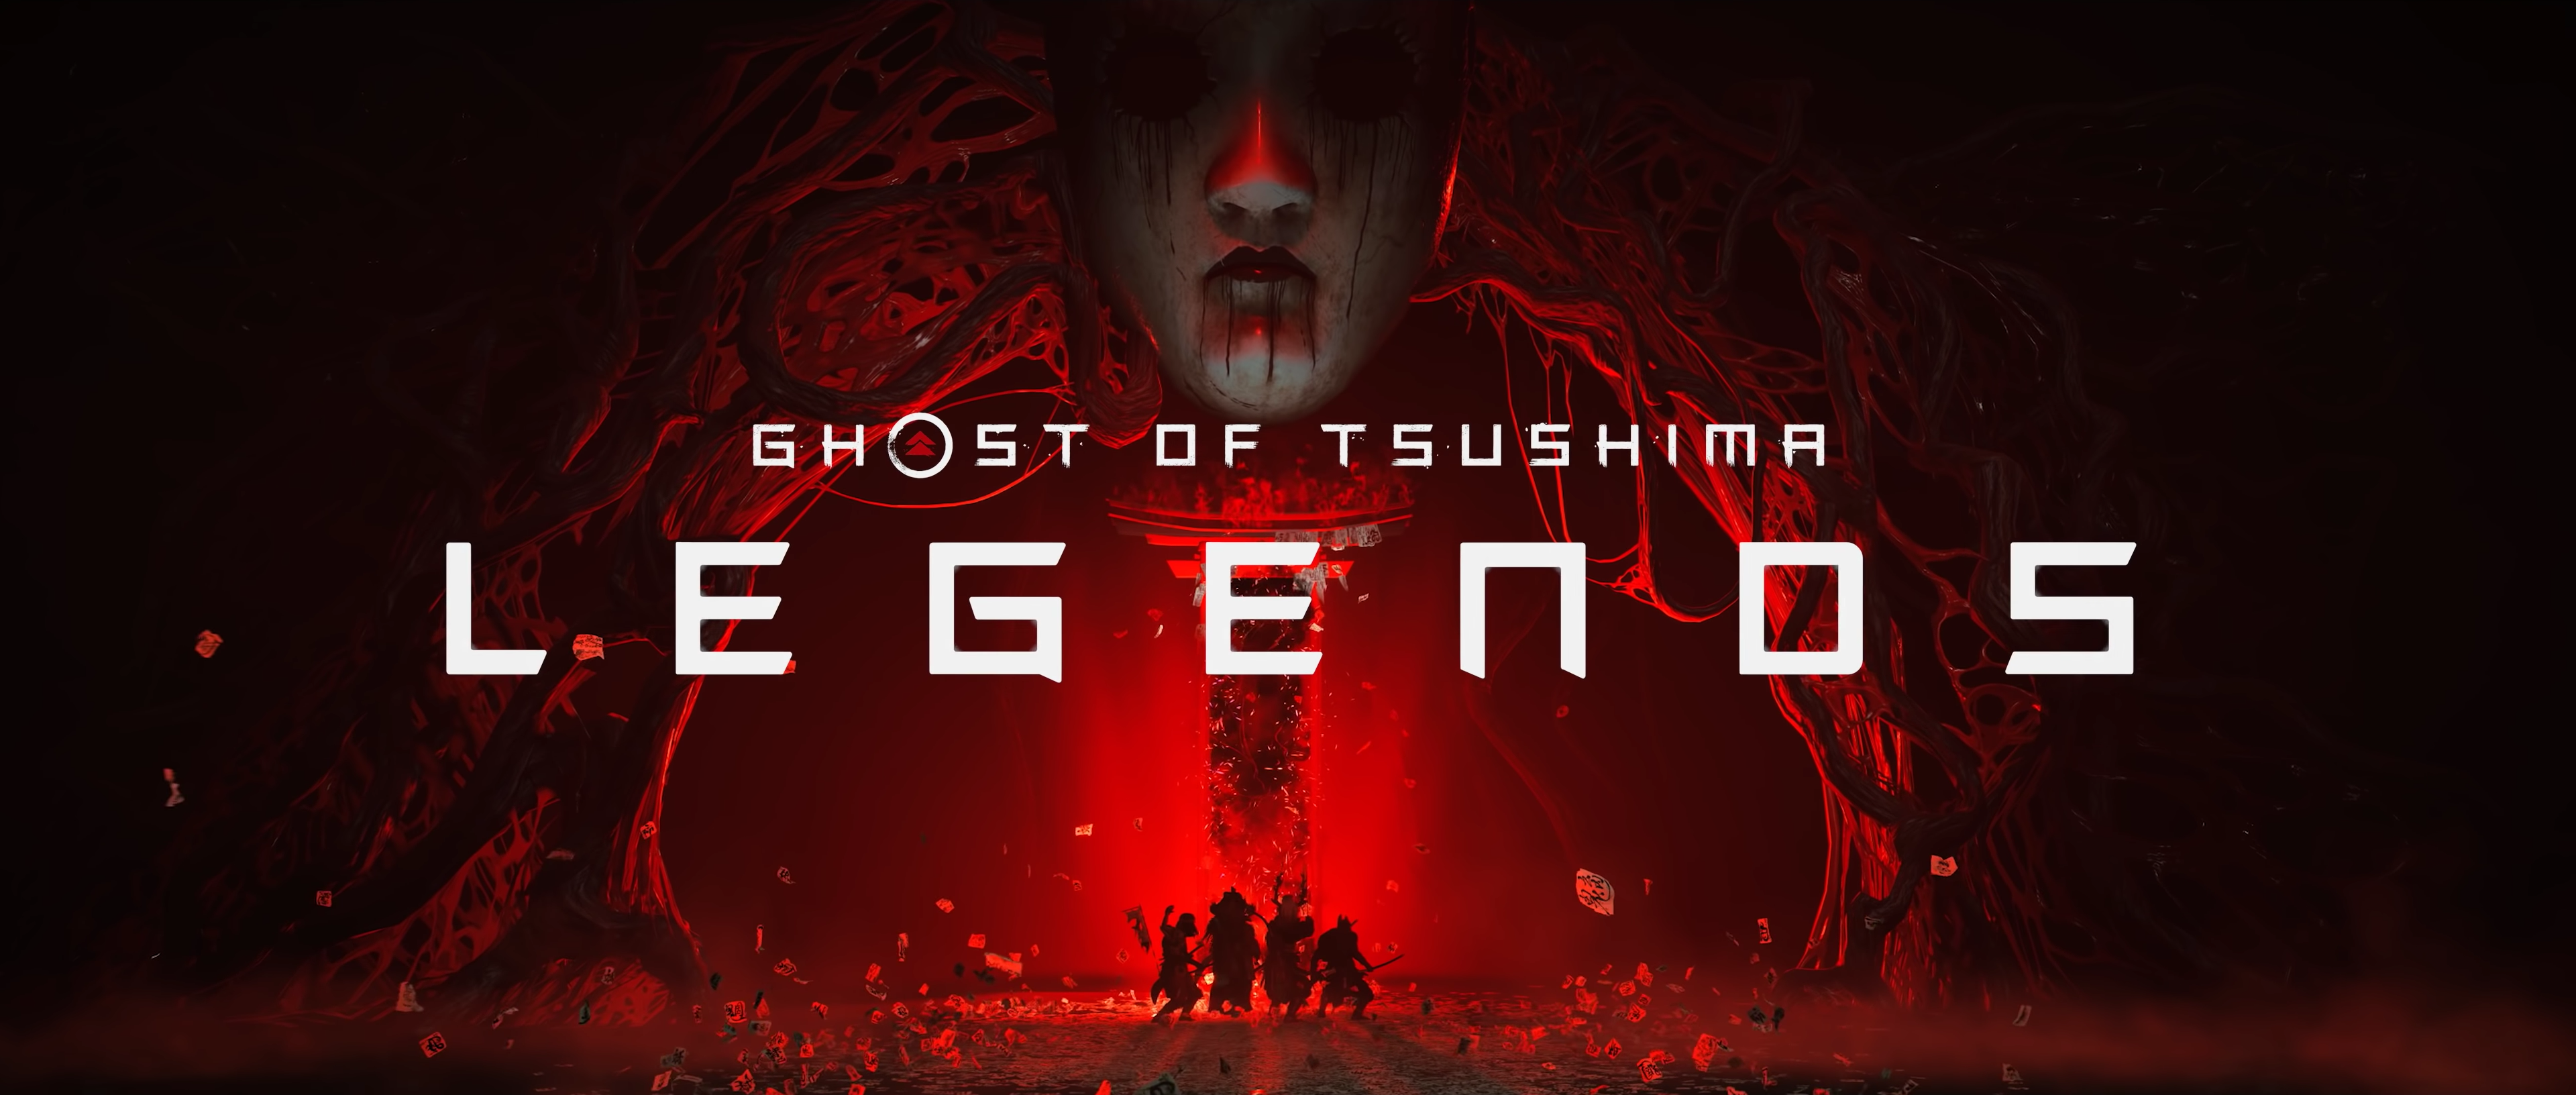 Ghost of Tsushima: Legends, Ghost of Tsushima Wiki